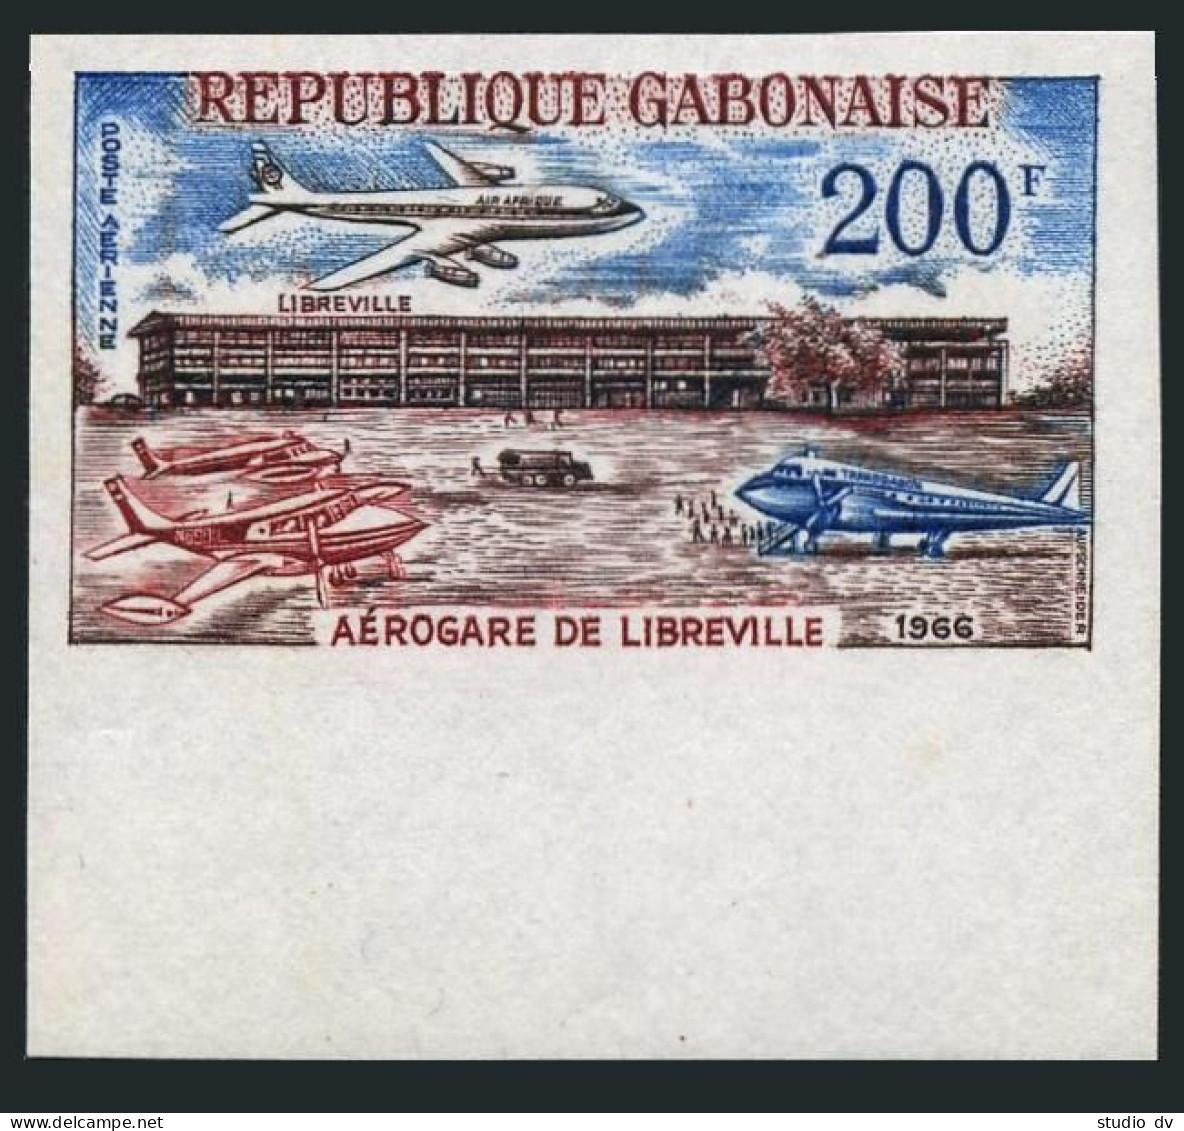 Gabon C49 Imperf,MNH.Mi 258B. Inauguration Of Libreville Airport,1966.Planes. - Gabon